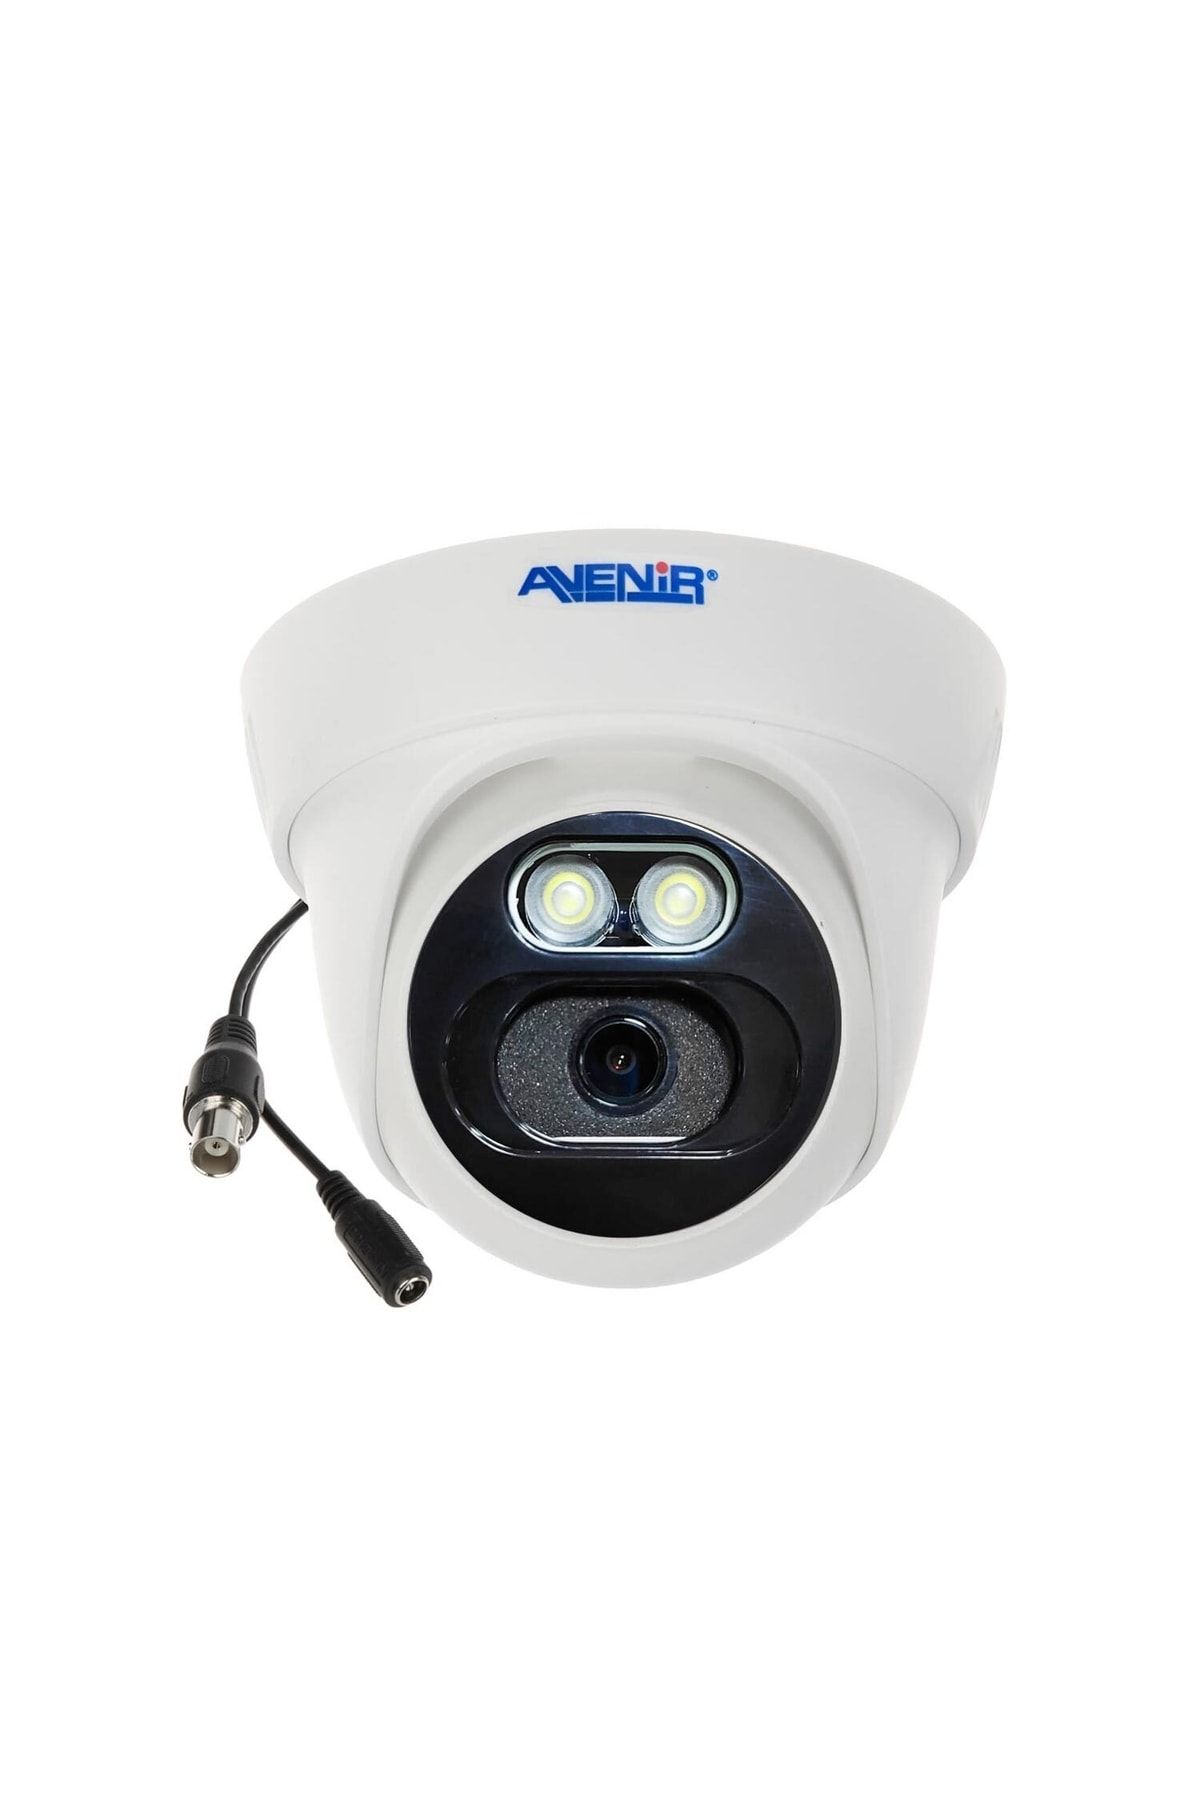 Avenir Ahd Kamera Dome 2mp 3.6mm 1080p 5 In 1 Starvis Fixed Lens Gece Renkli Av-df239 Uyumlu